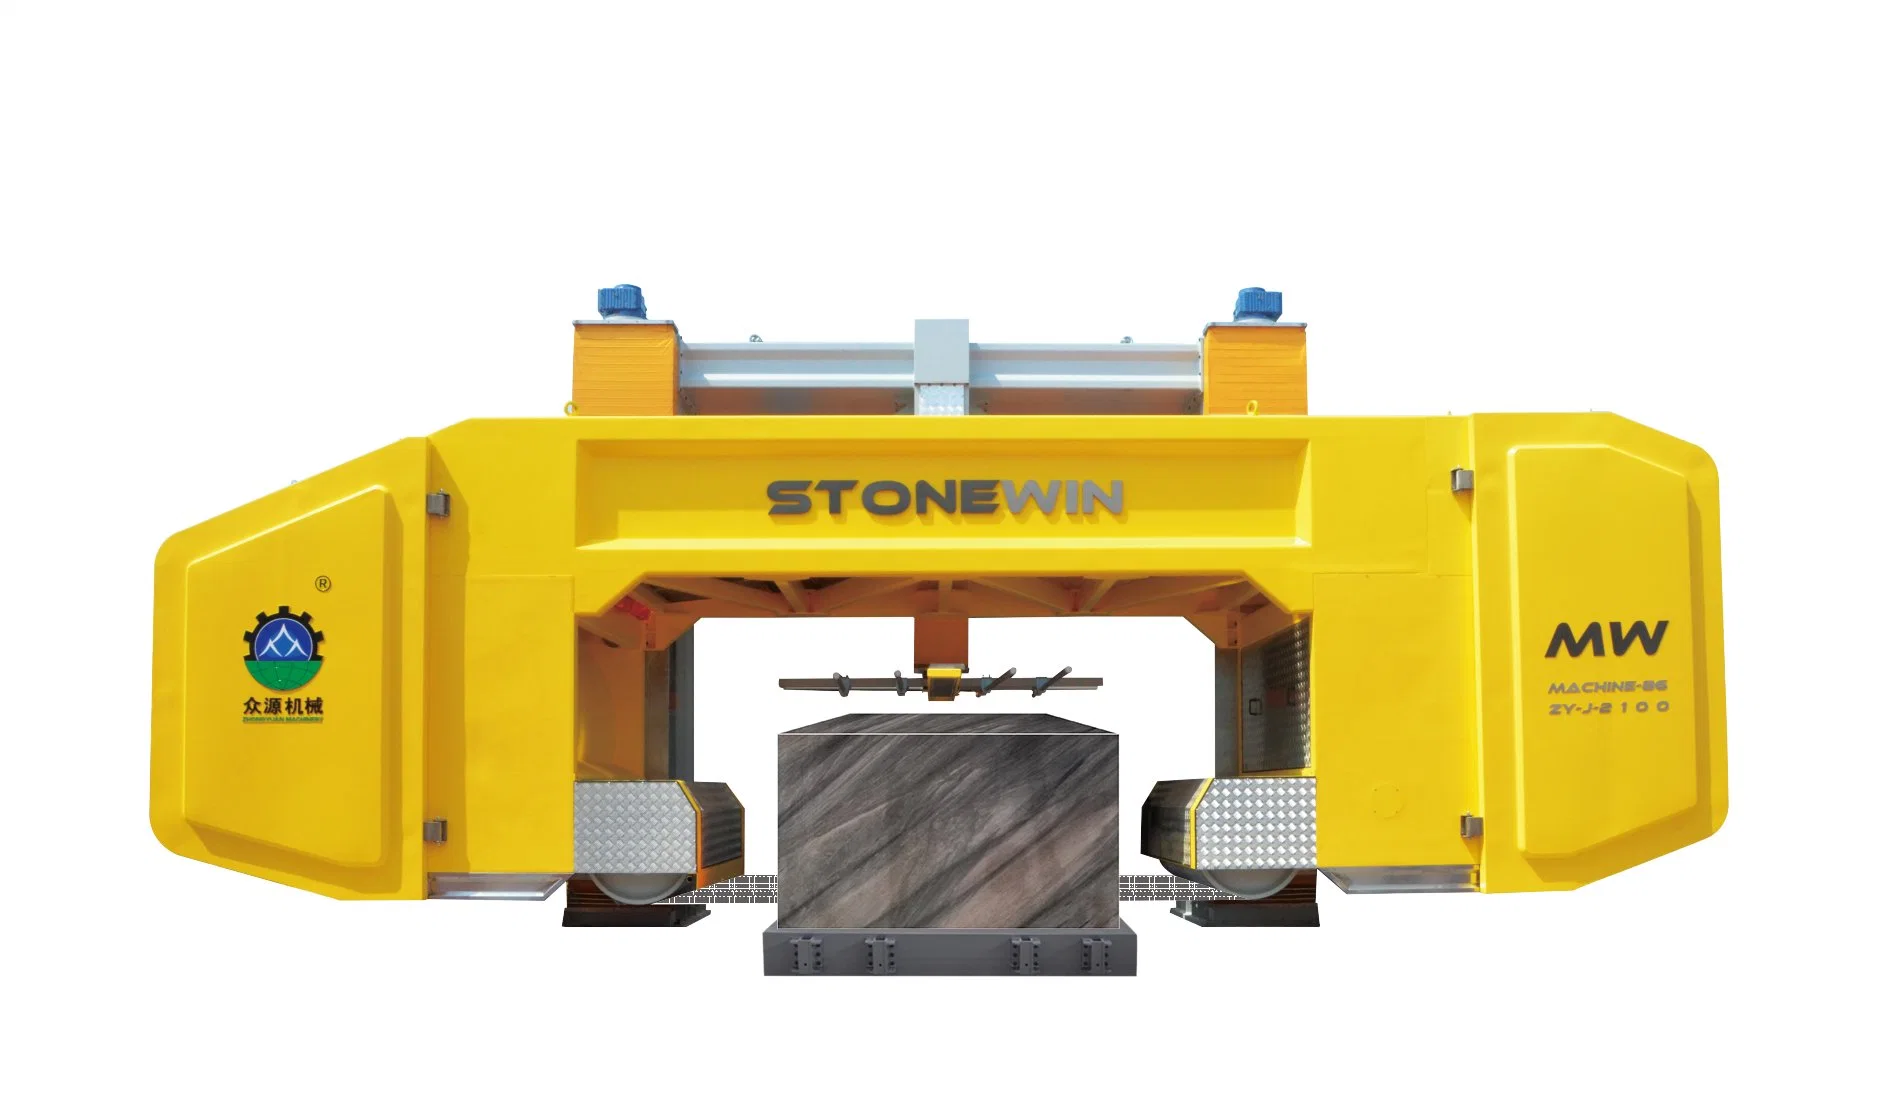 Zhongyuan Stonewin 58-Wire Diamond Multi-Wire Saw Machine: Elevating Stone Craftsmanship with Precision Block Cutting